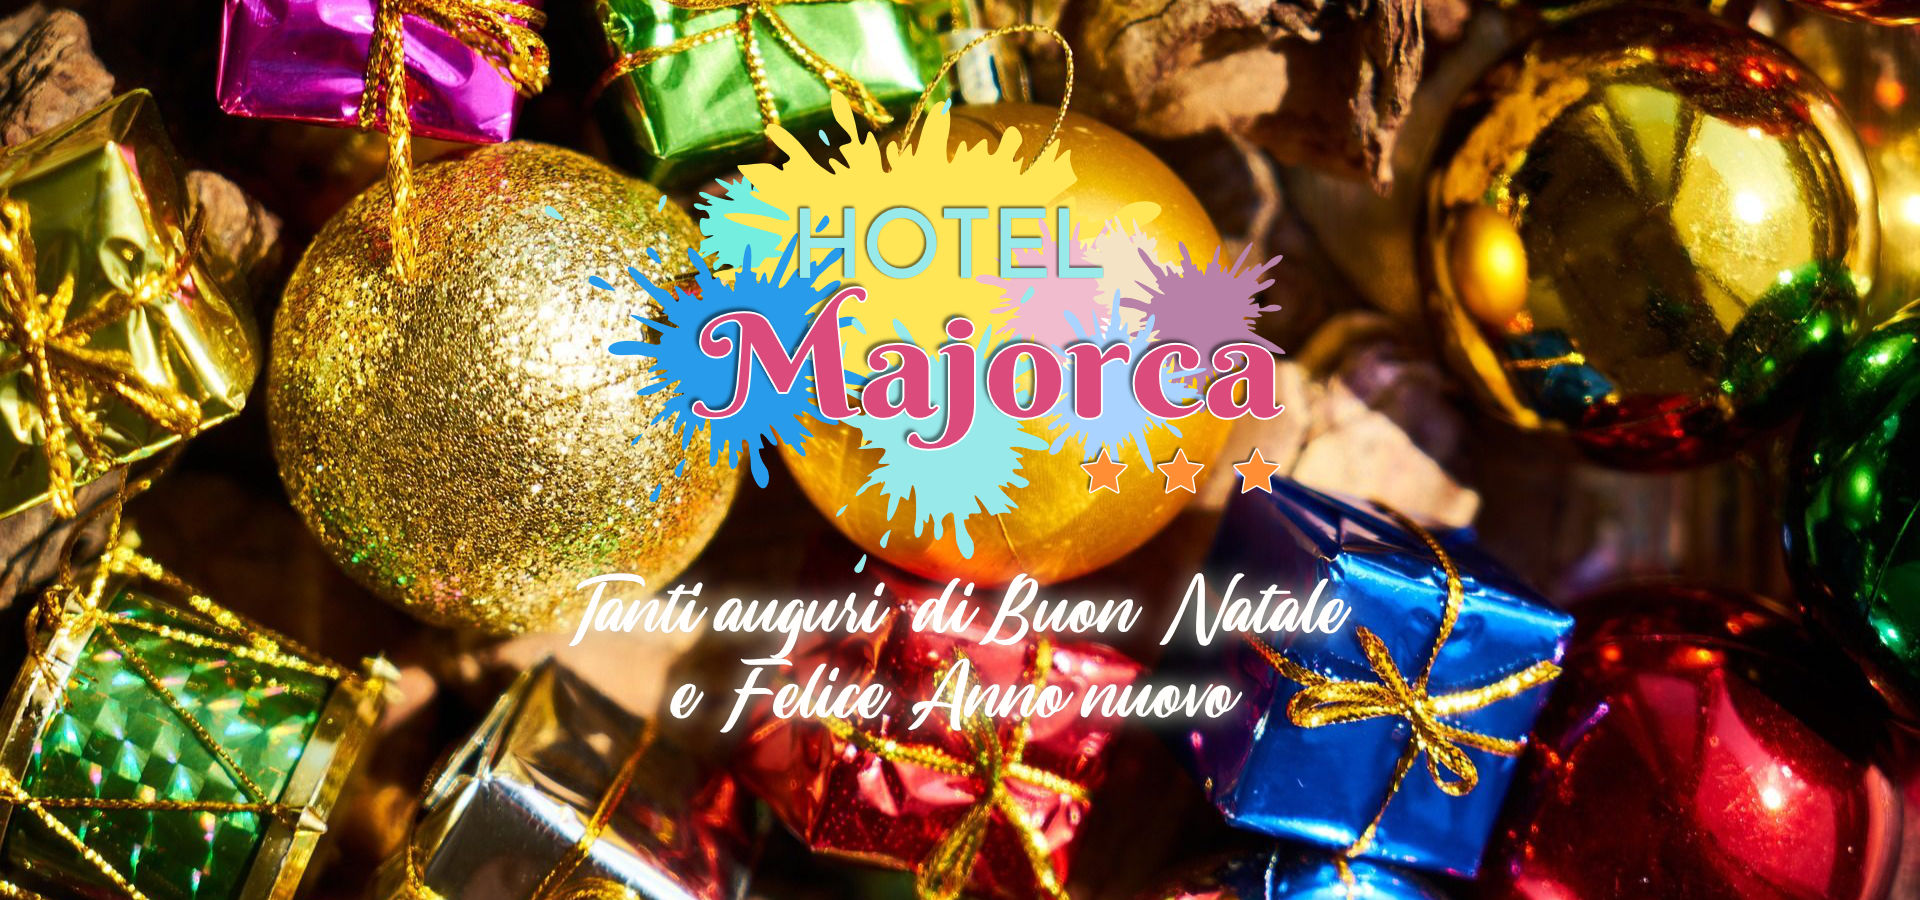 Hotel Majorca - Cattolica